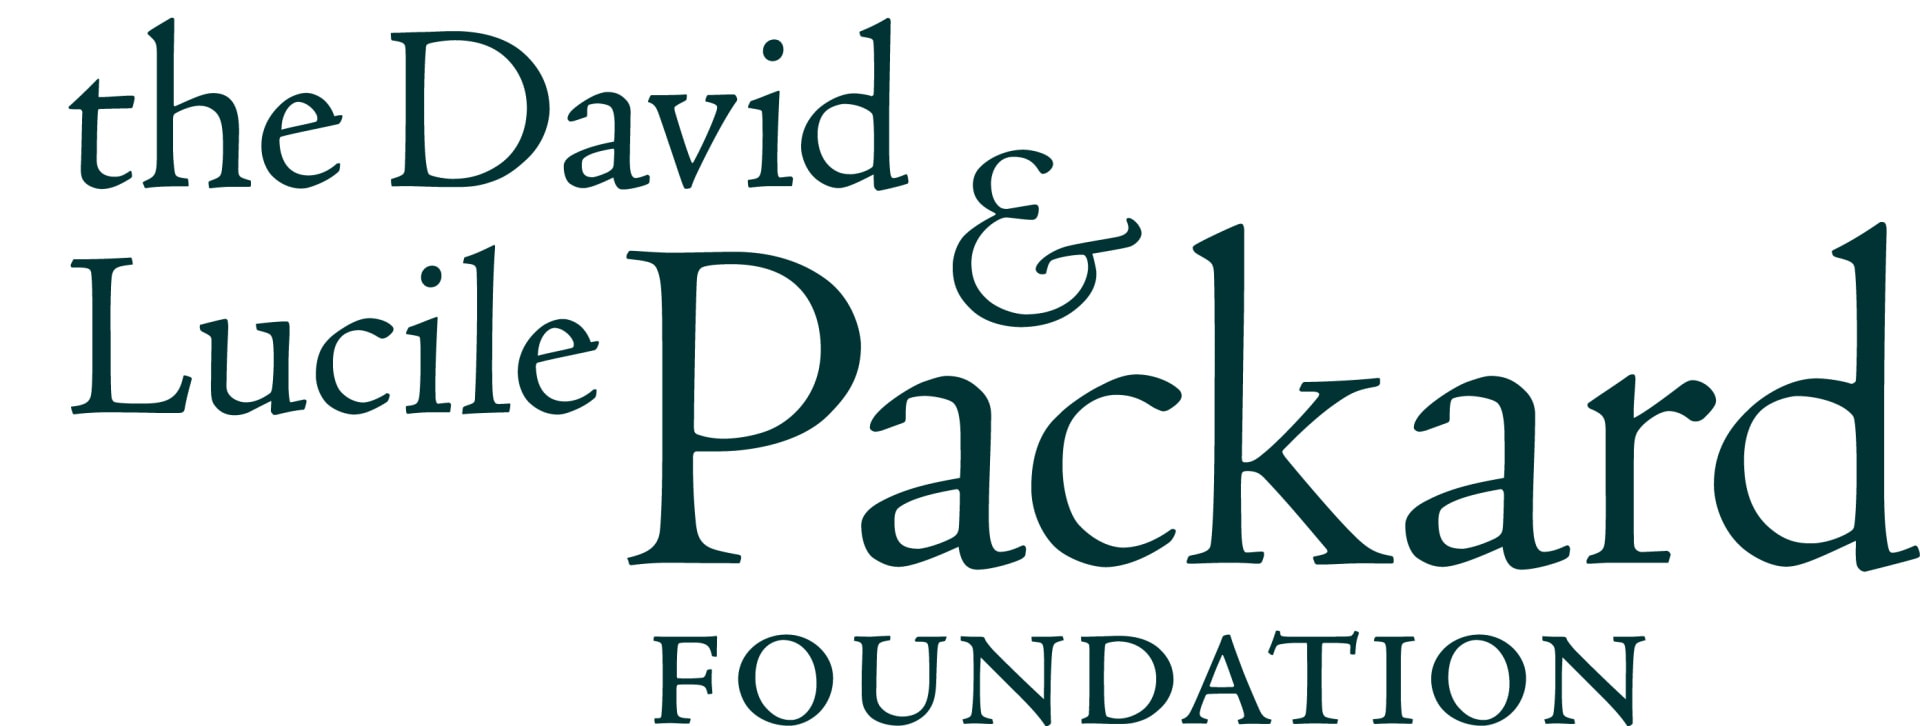 packard-foundation-logo